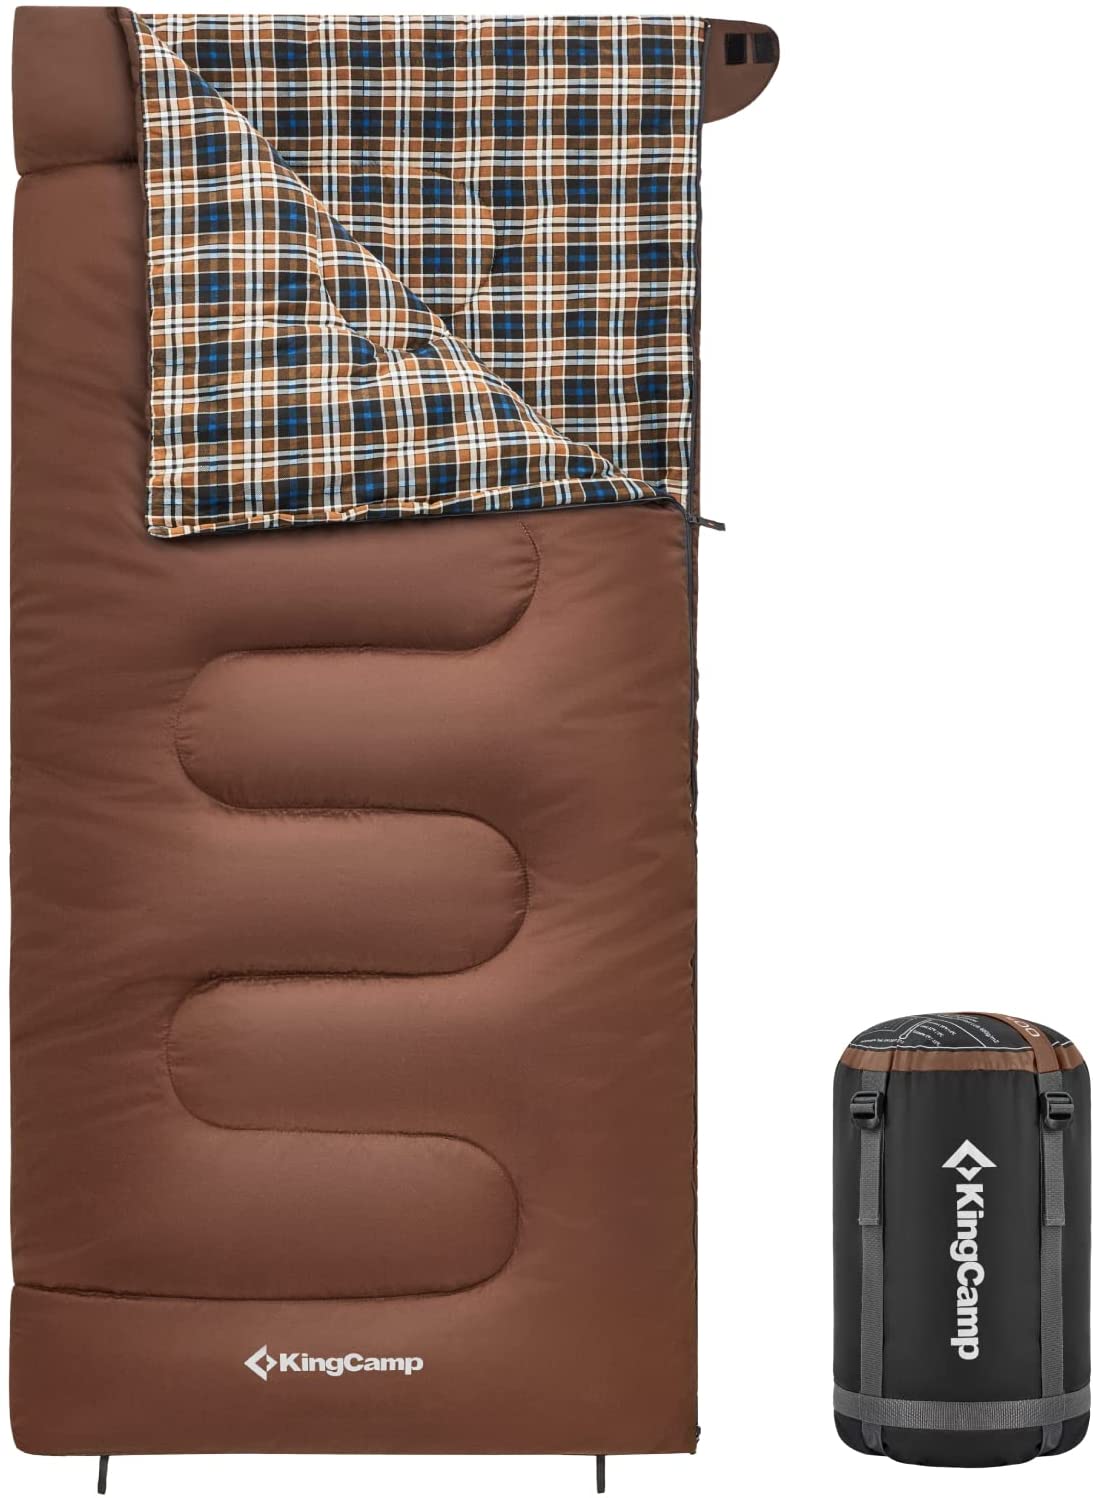 KingCamp Camping Sleeping Bag Cotton Flannel Sleeping Bags Cold Weathe